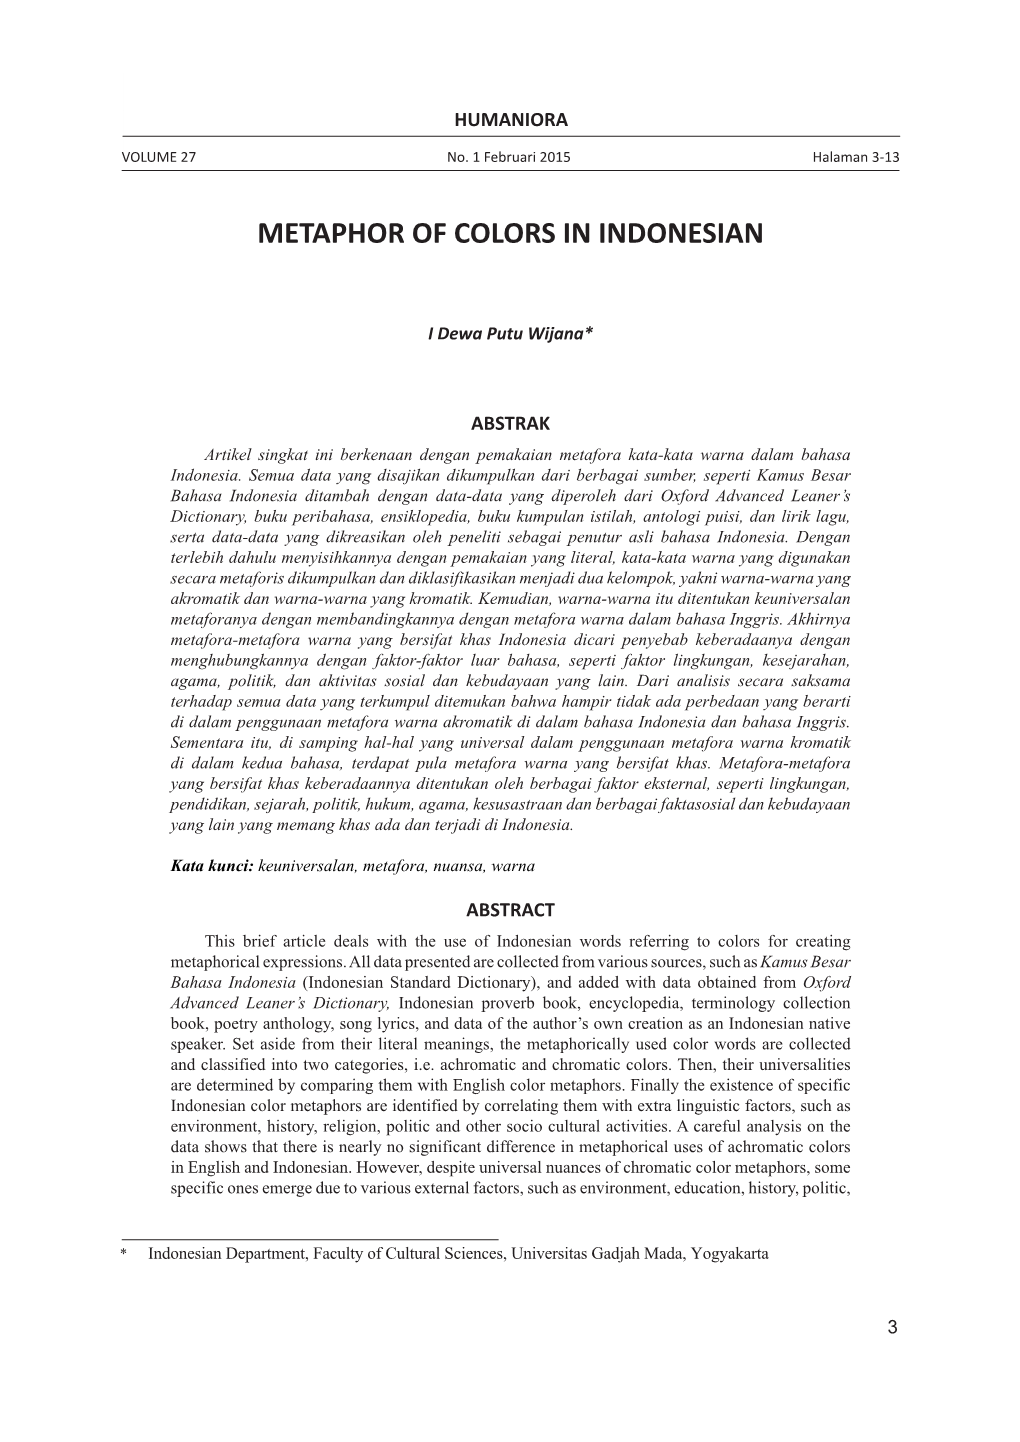 Metaphor of Colors in Indonesian